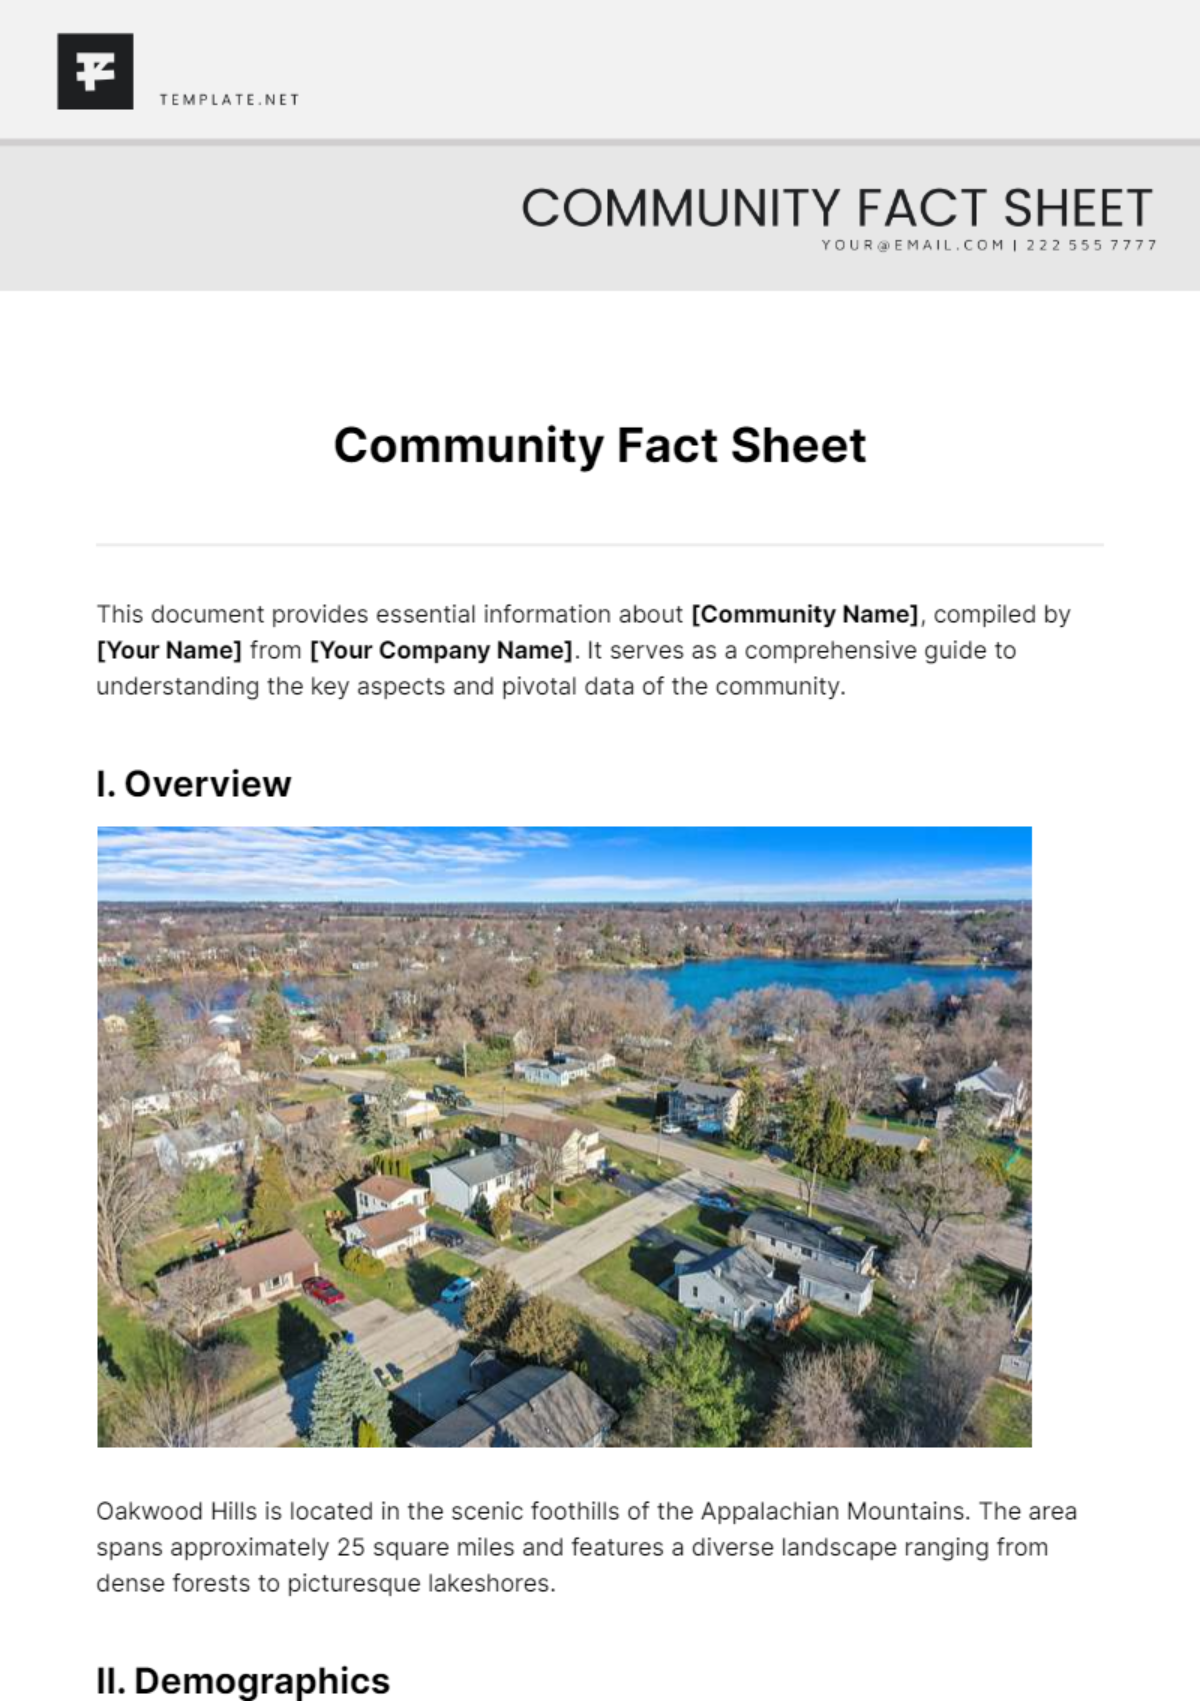 Community Fact Sheet Template